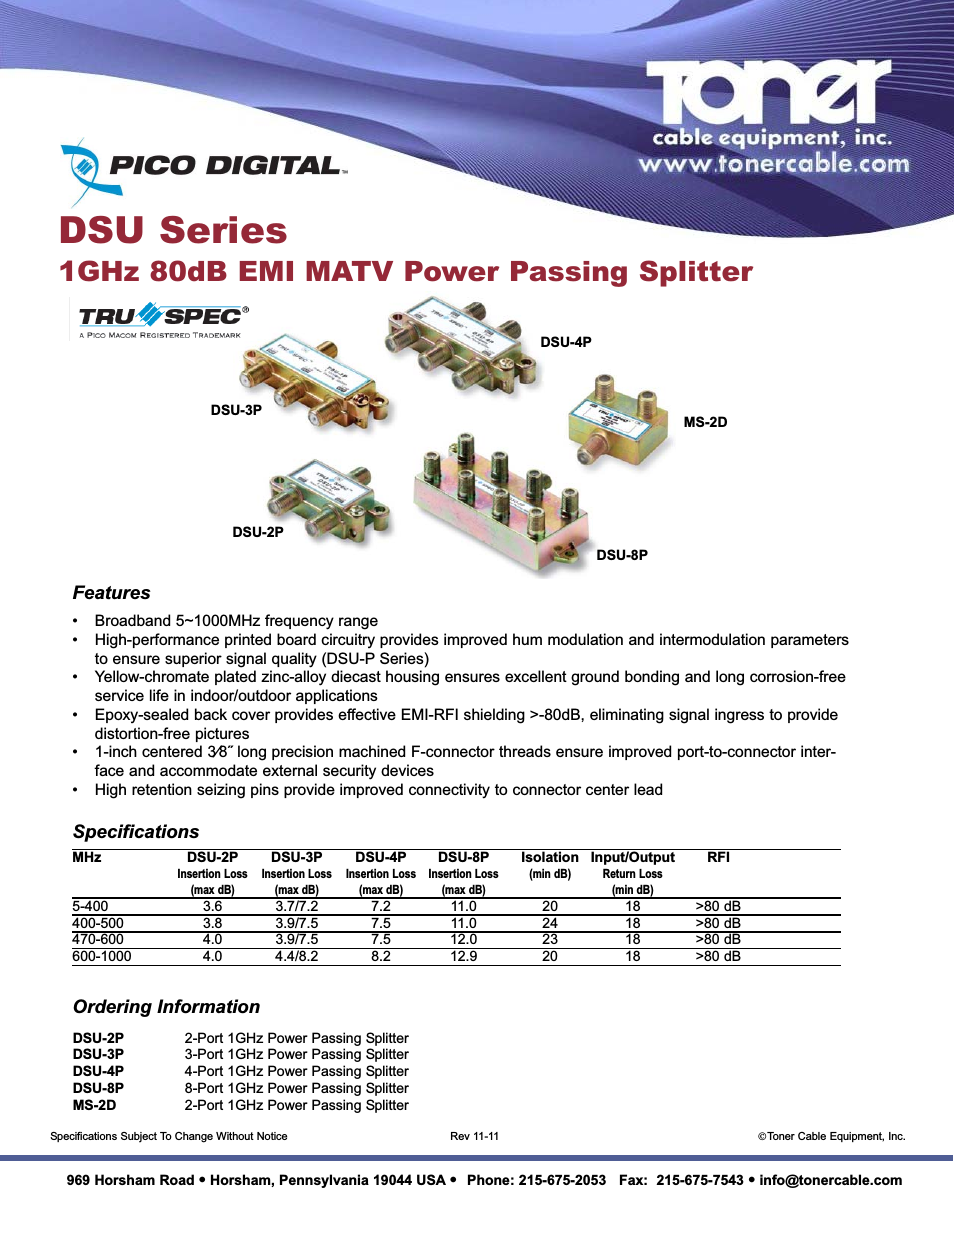 DSU Series 1GHz 80dB EMI MATV Power Passing Splitter